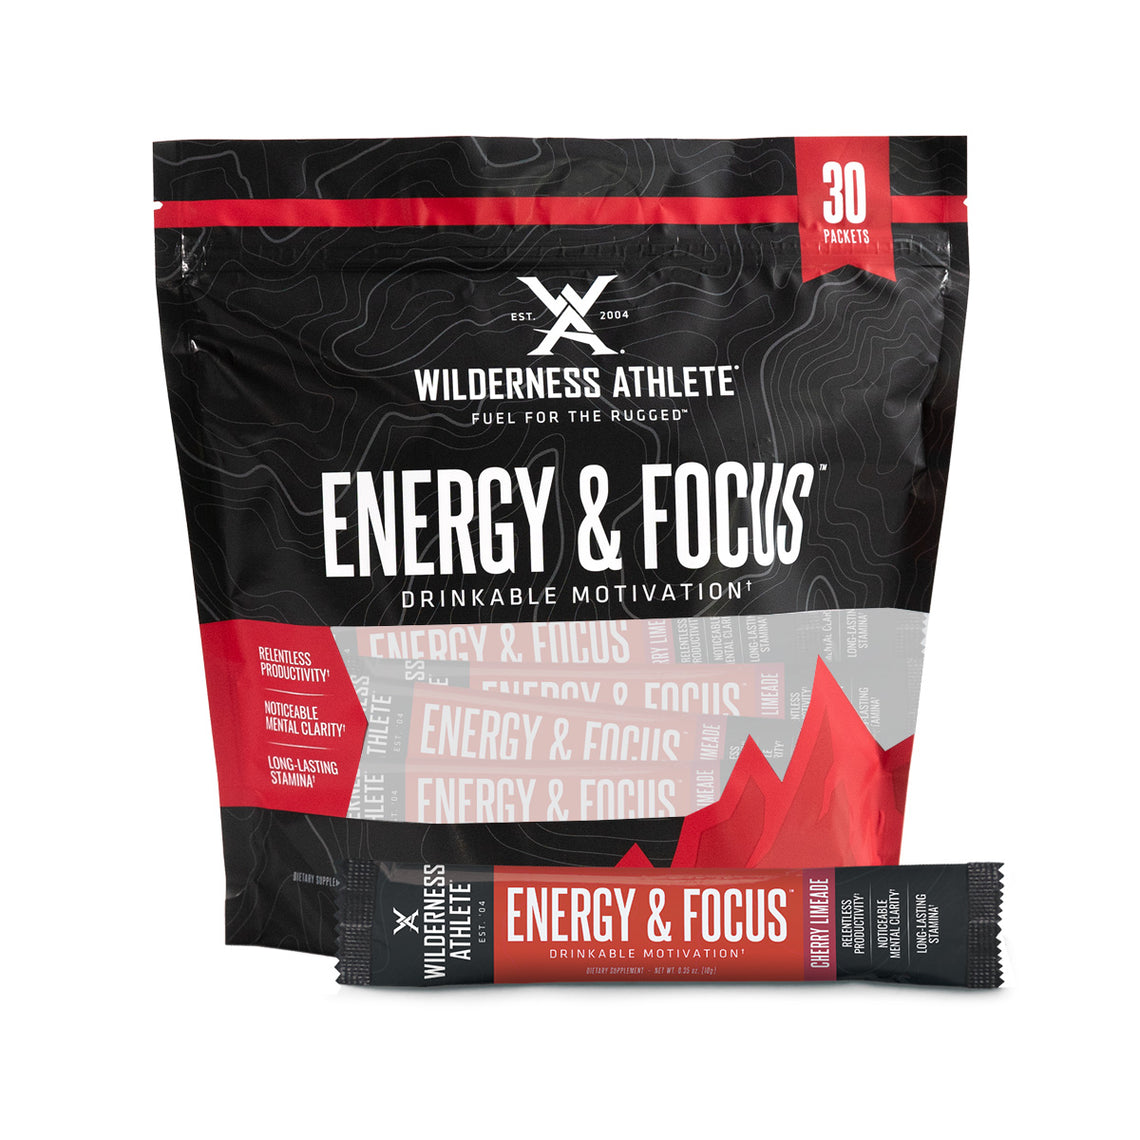 Wilderness Athlete Energy & Focus Packets